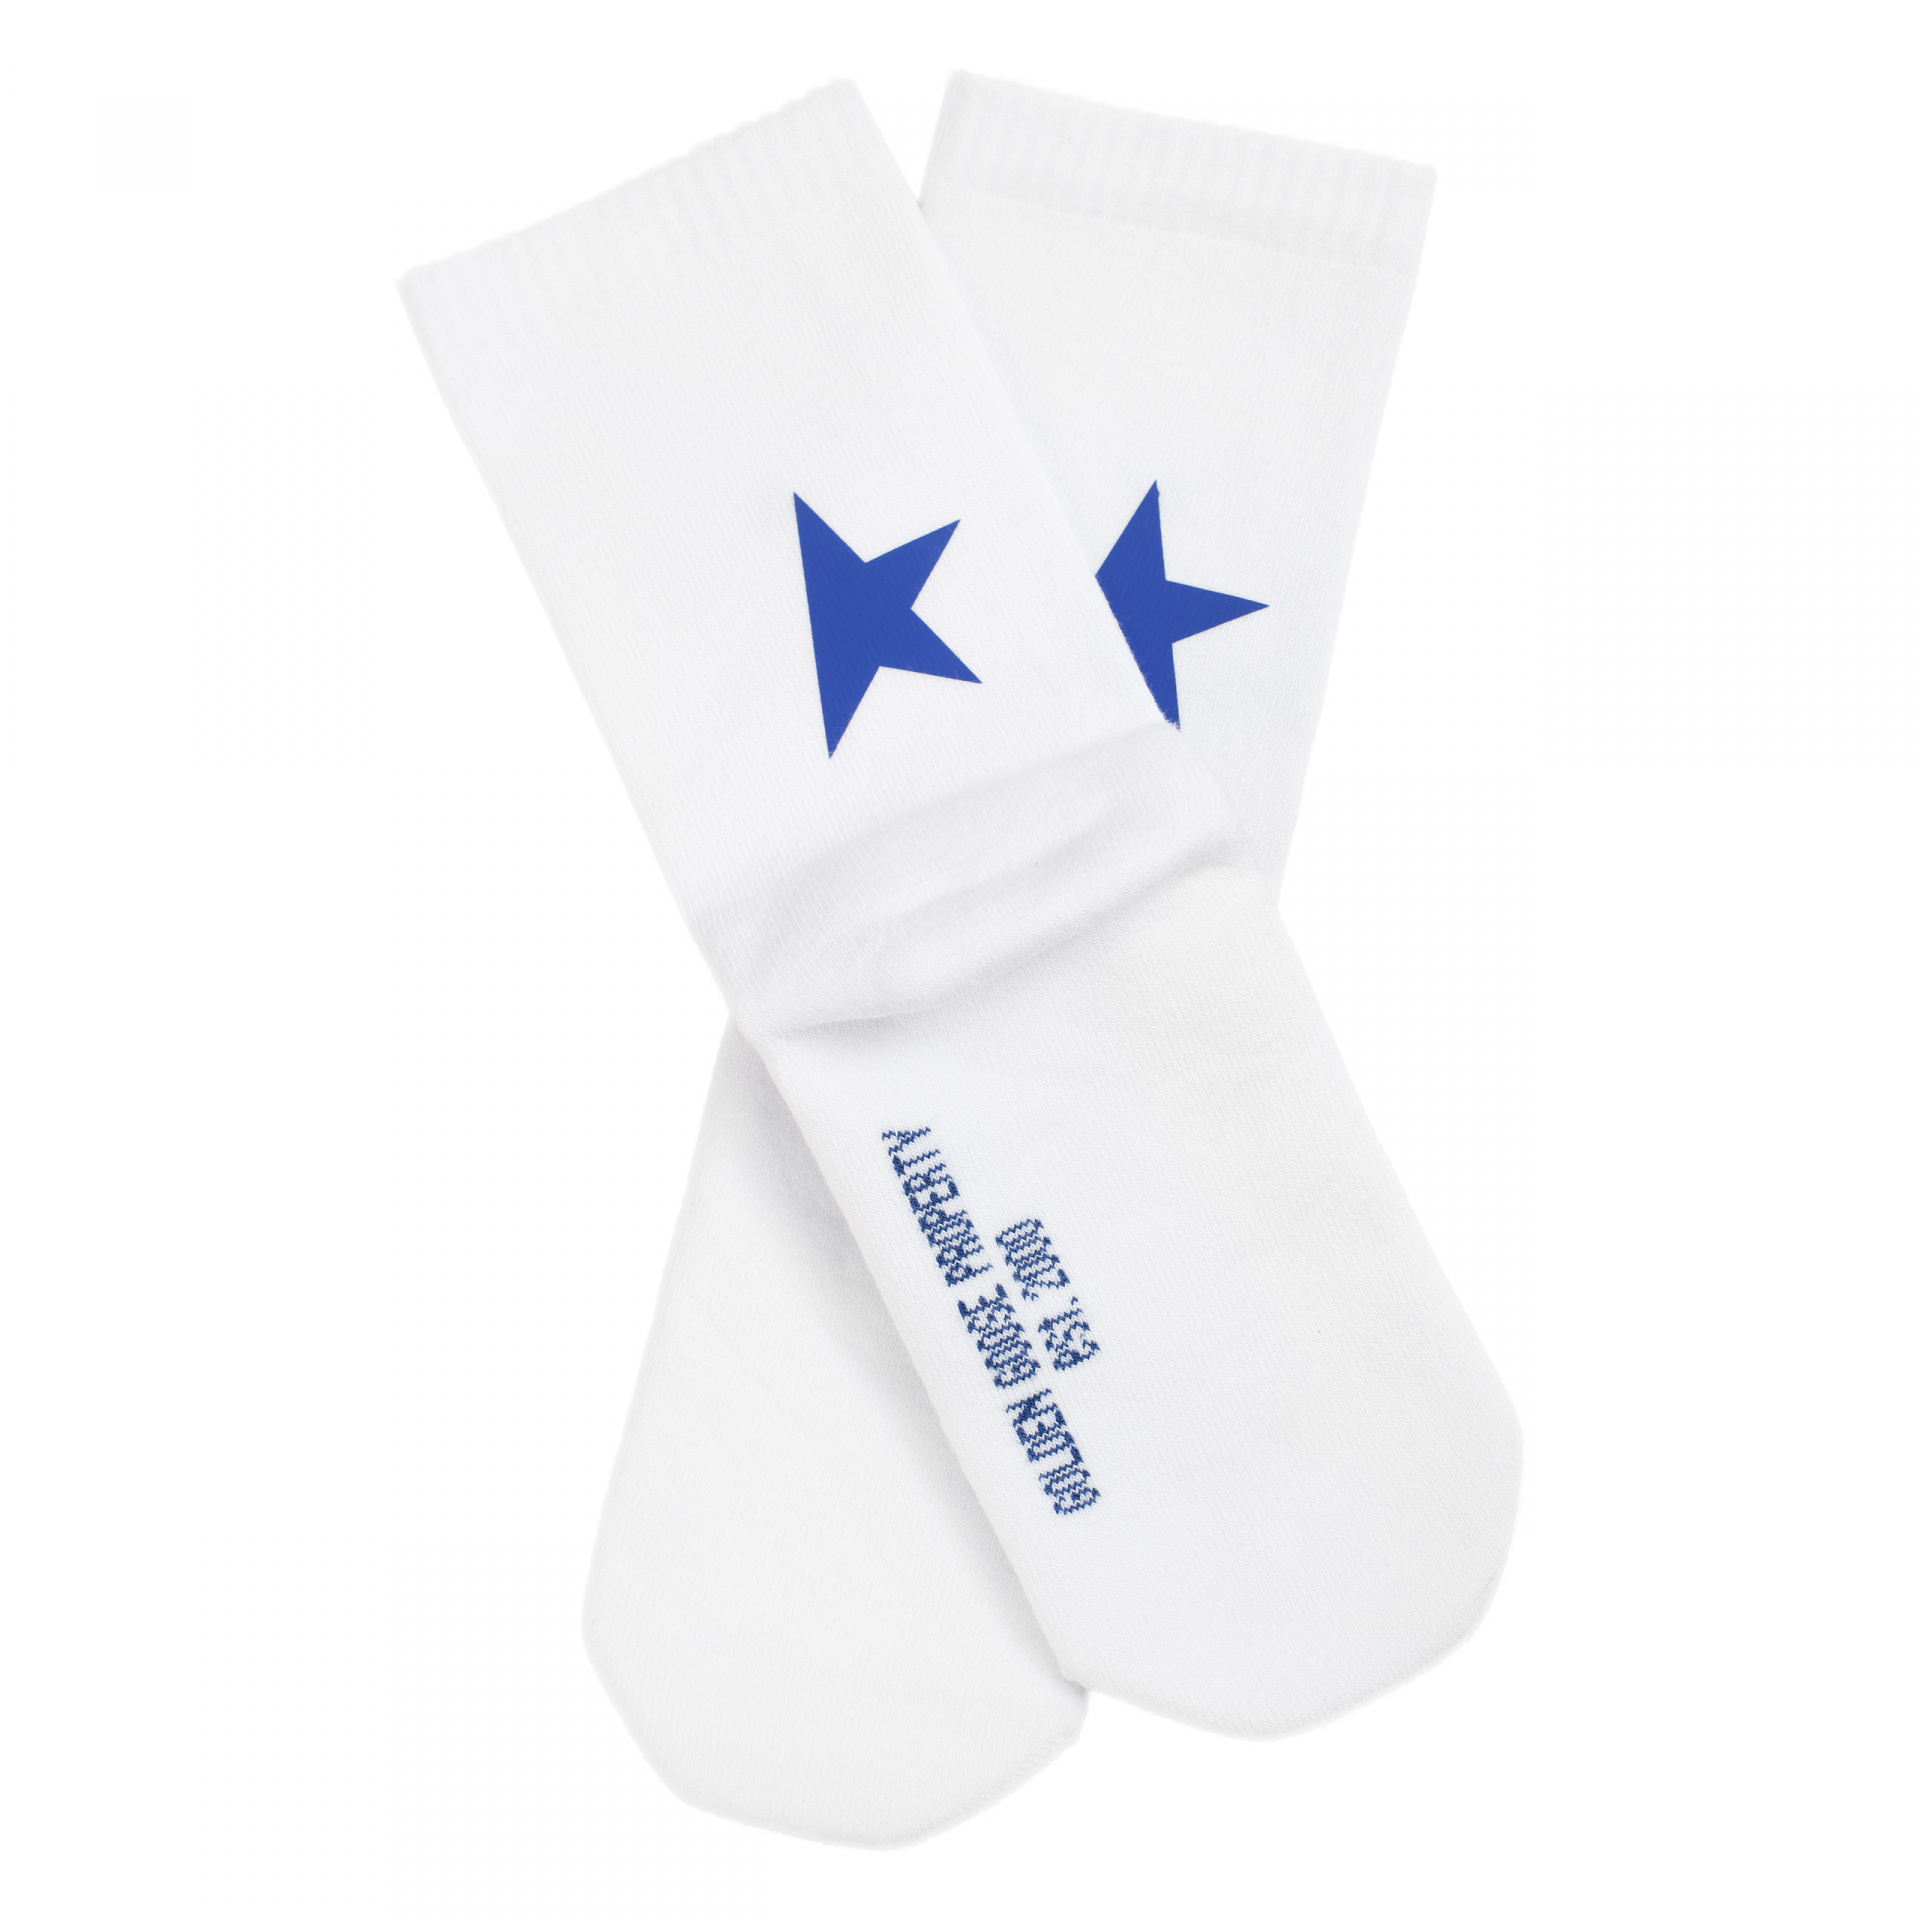 Shop Golden Goose Deluxe Brand socks for men online at SV77